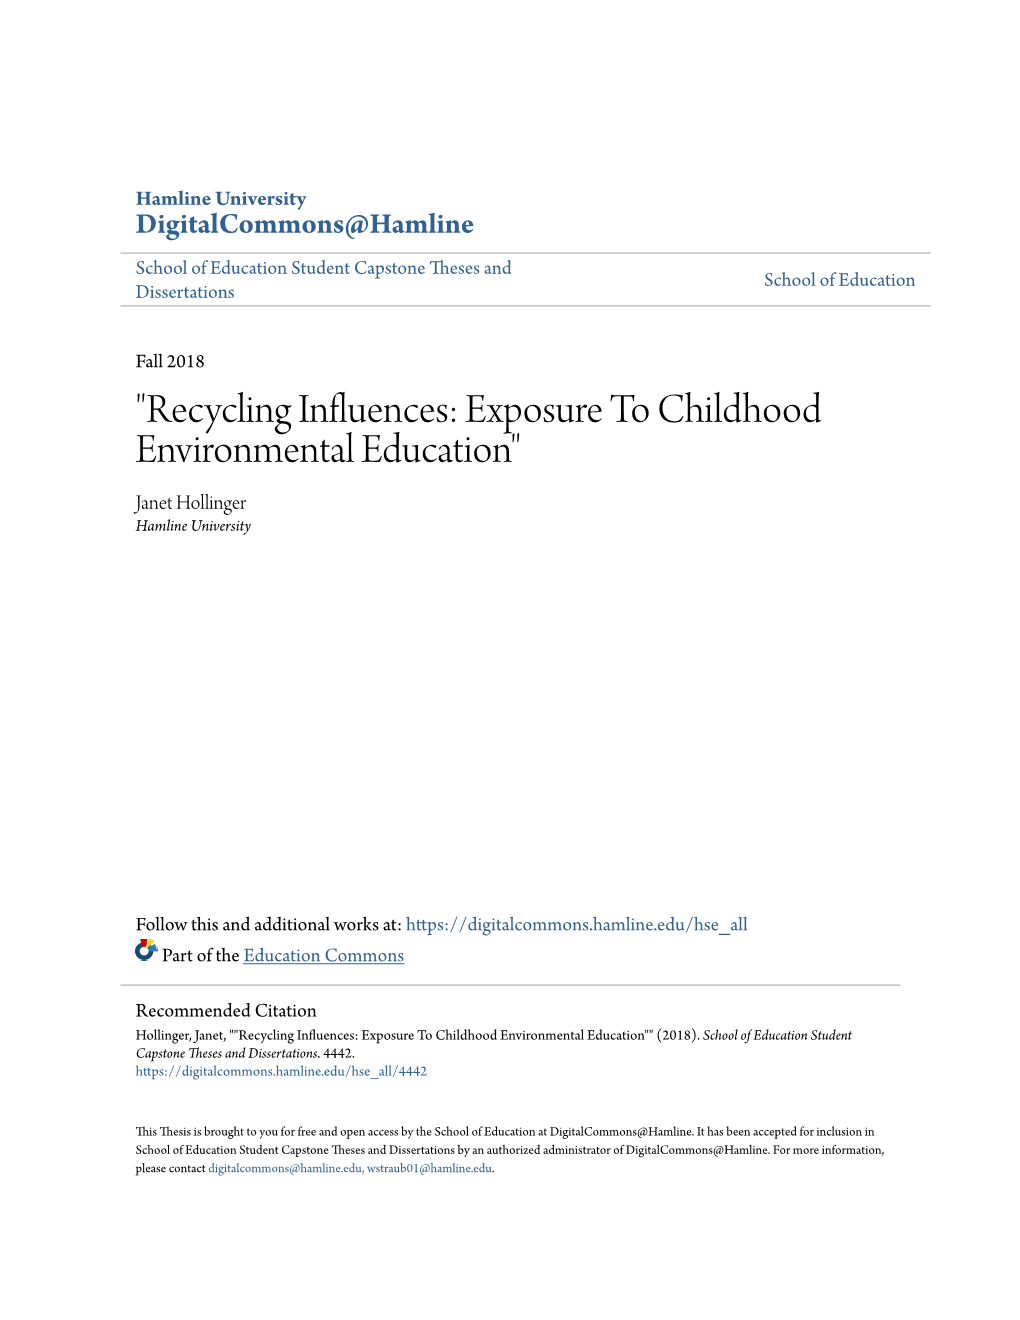 "Recycling Influences: Exposure to Childhood Environmental Education" Janet Hollinger Hamline University